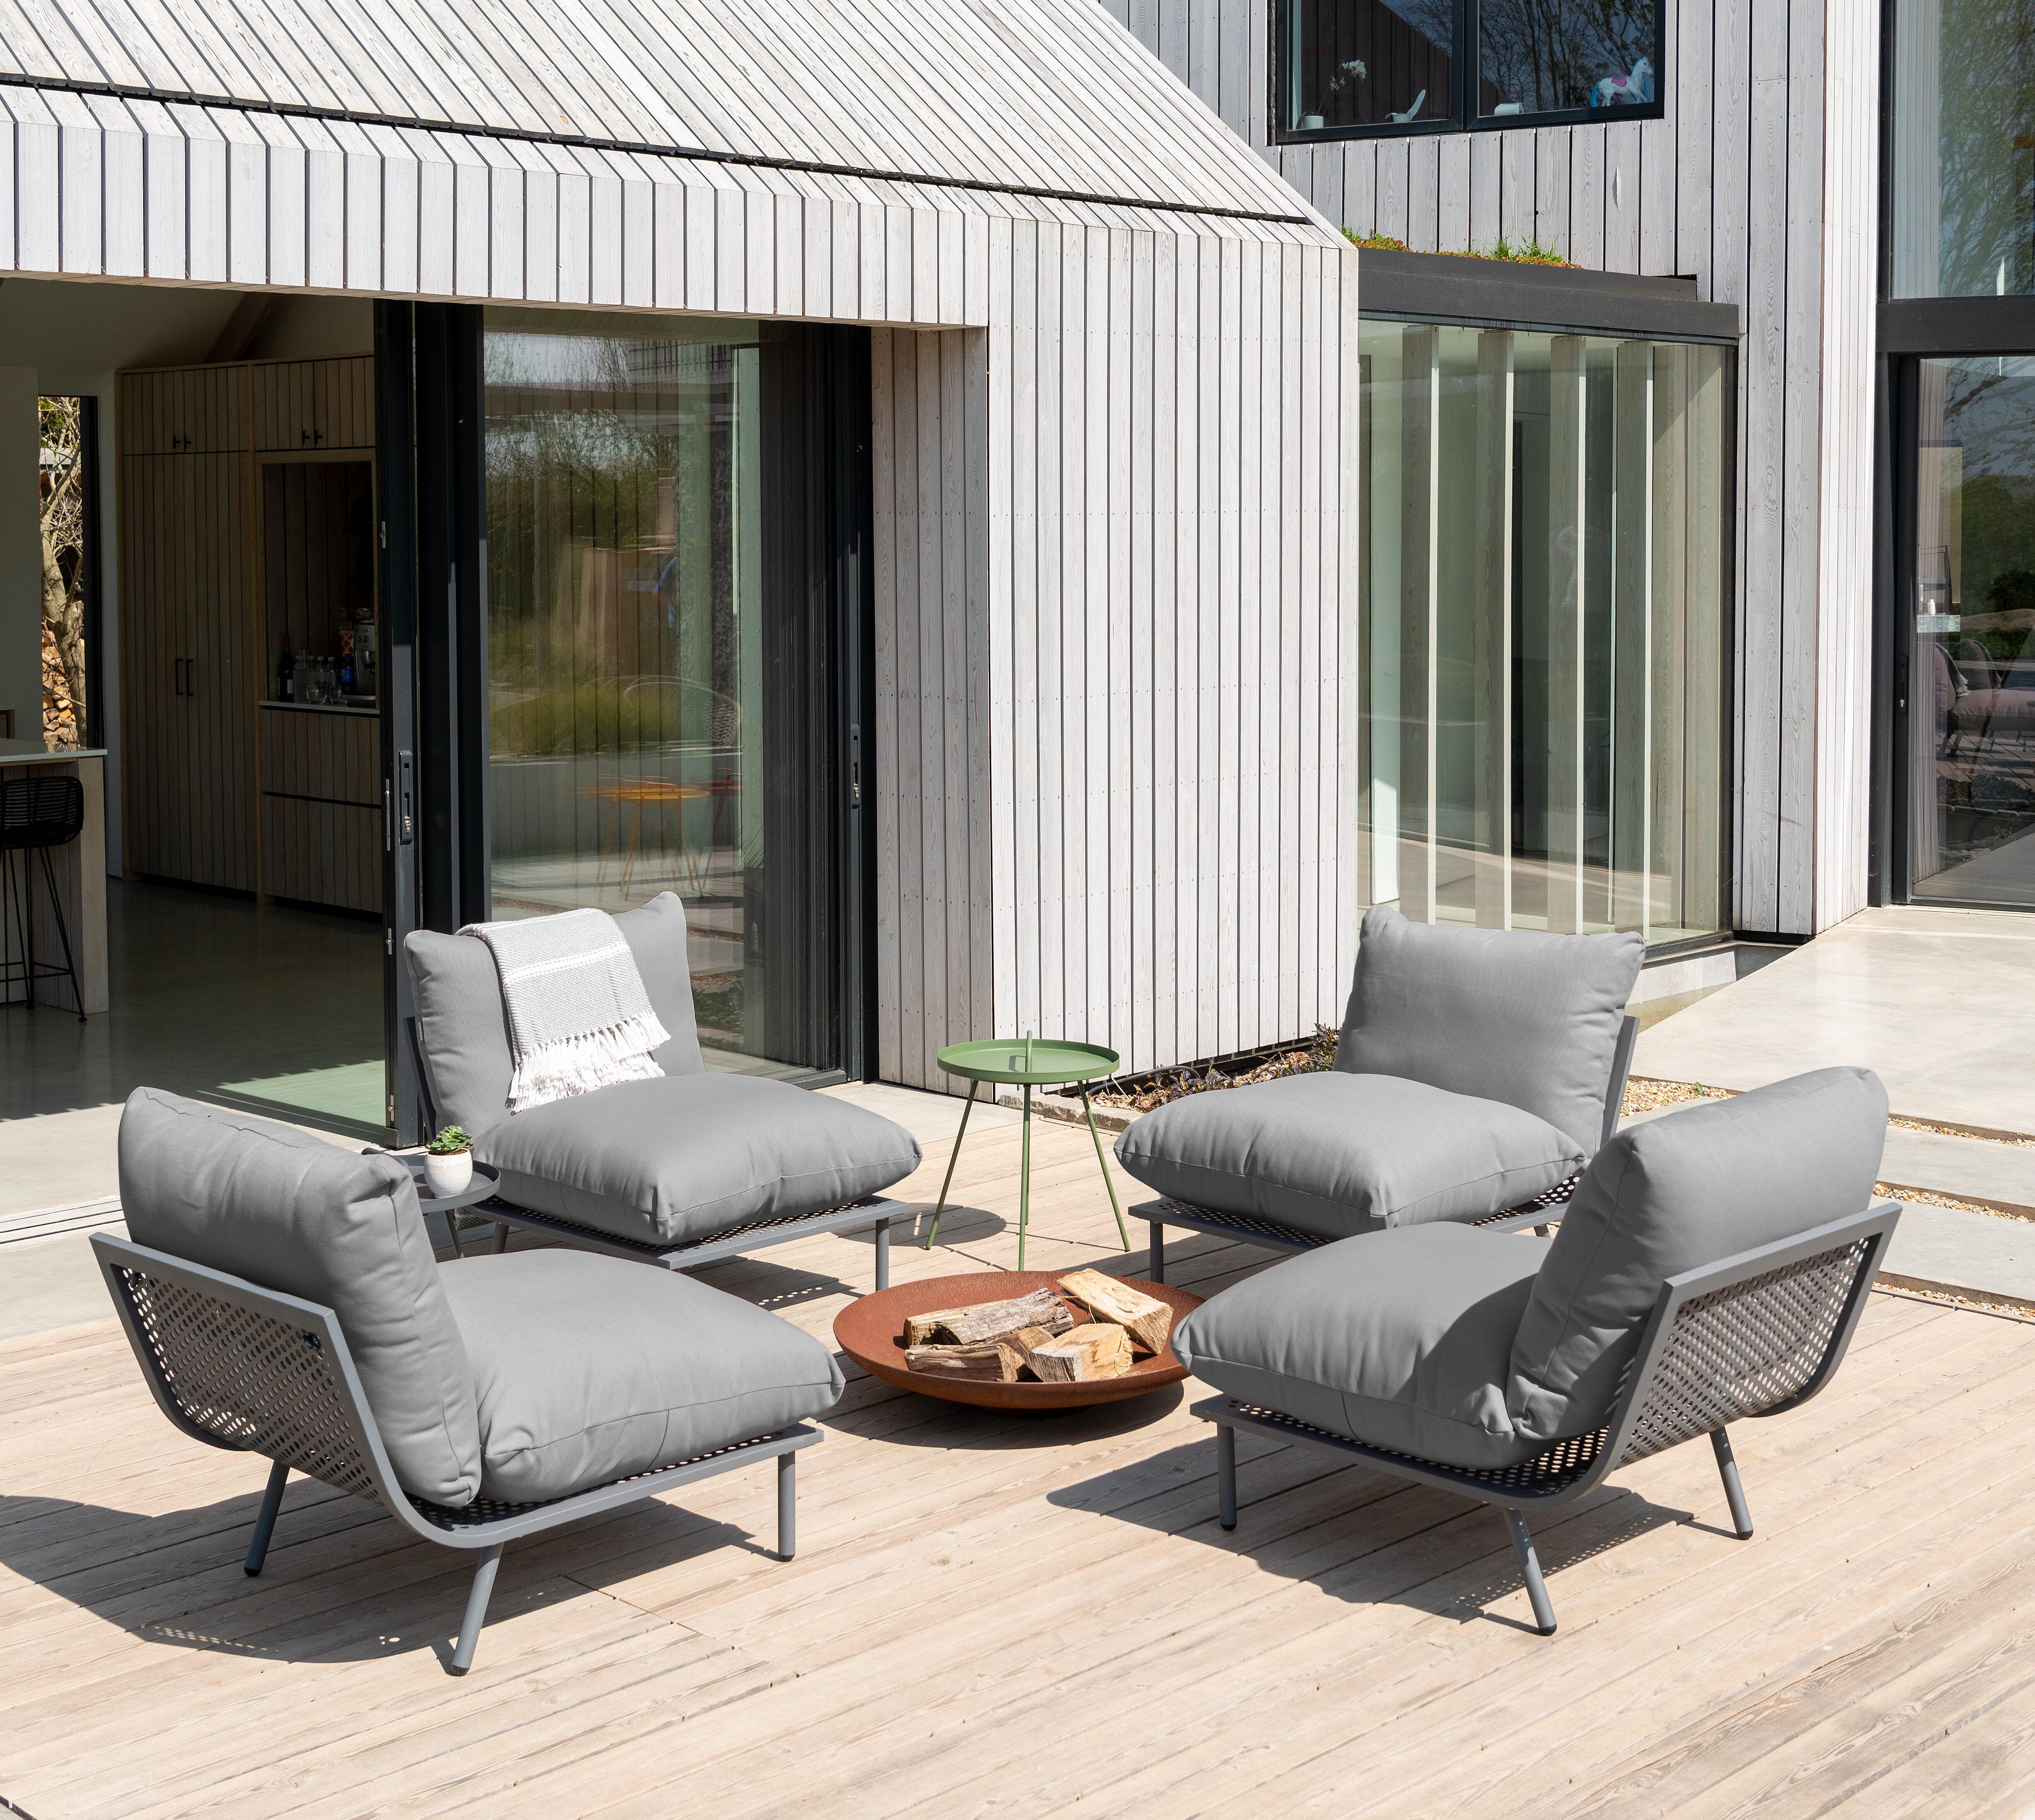 grey modular sofa lounge chair units all weather fabric cushions beach